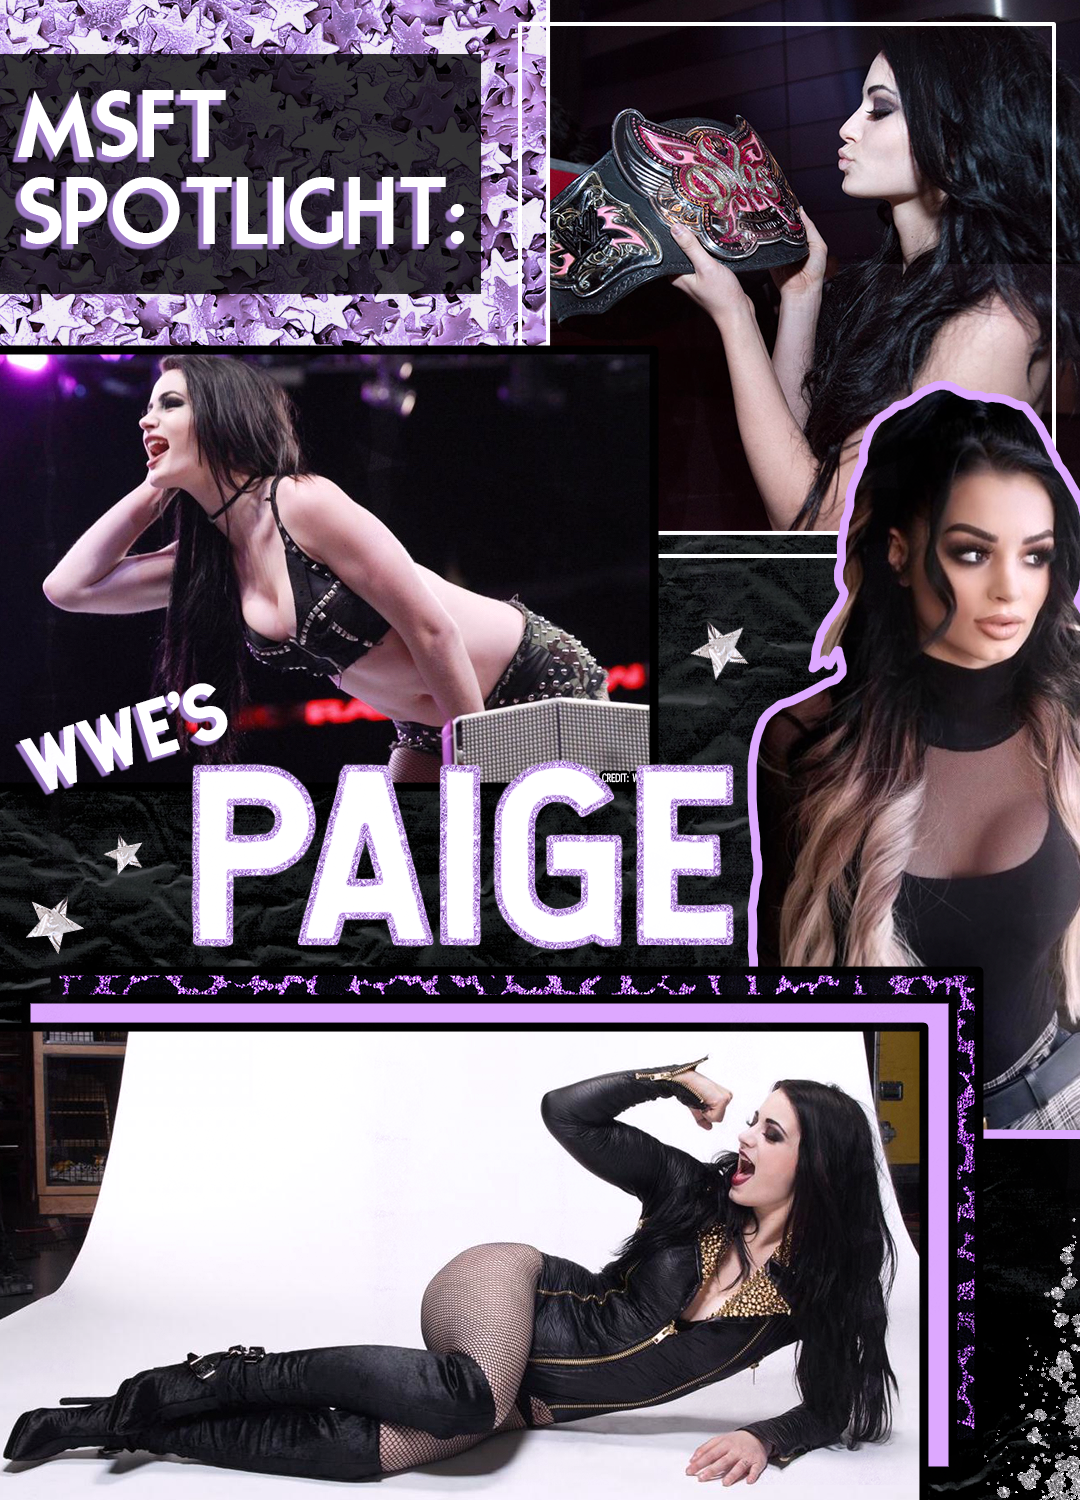 WWE Diva Paige Saraya Jade Bevis